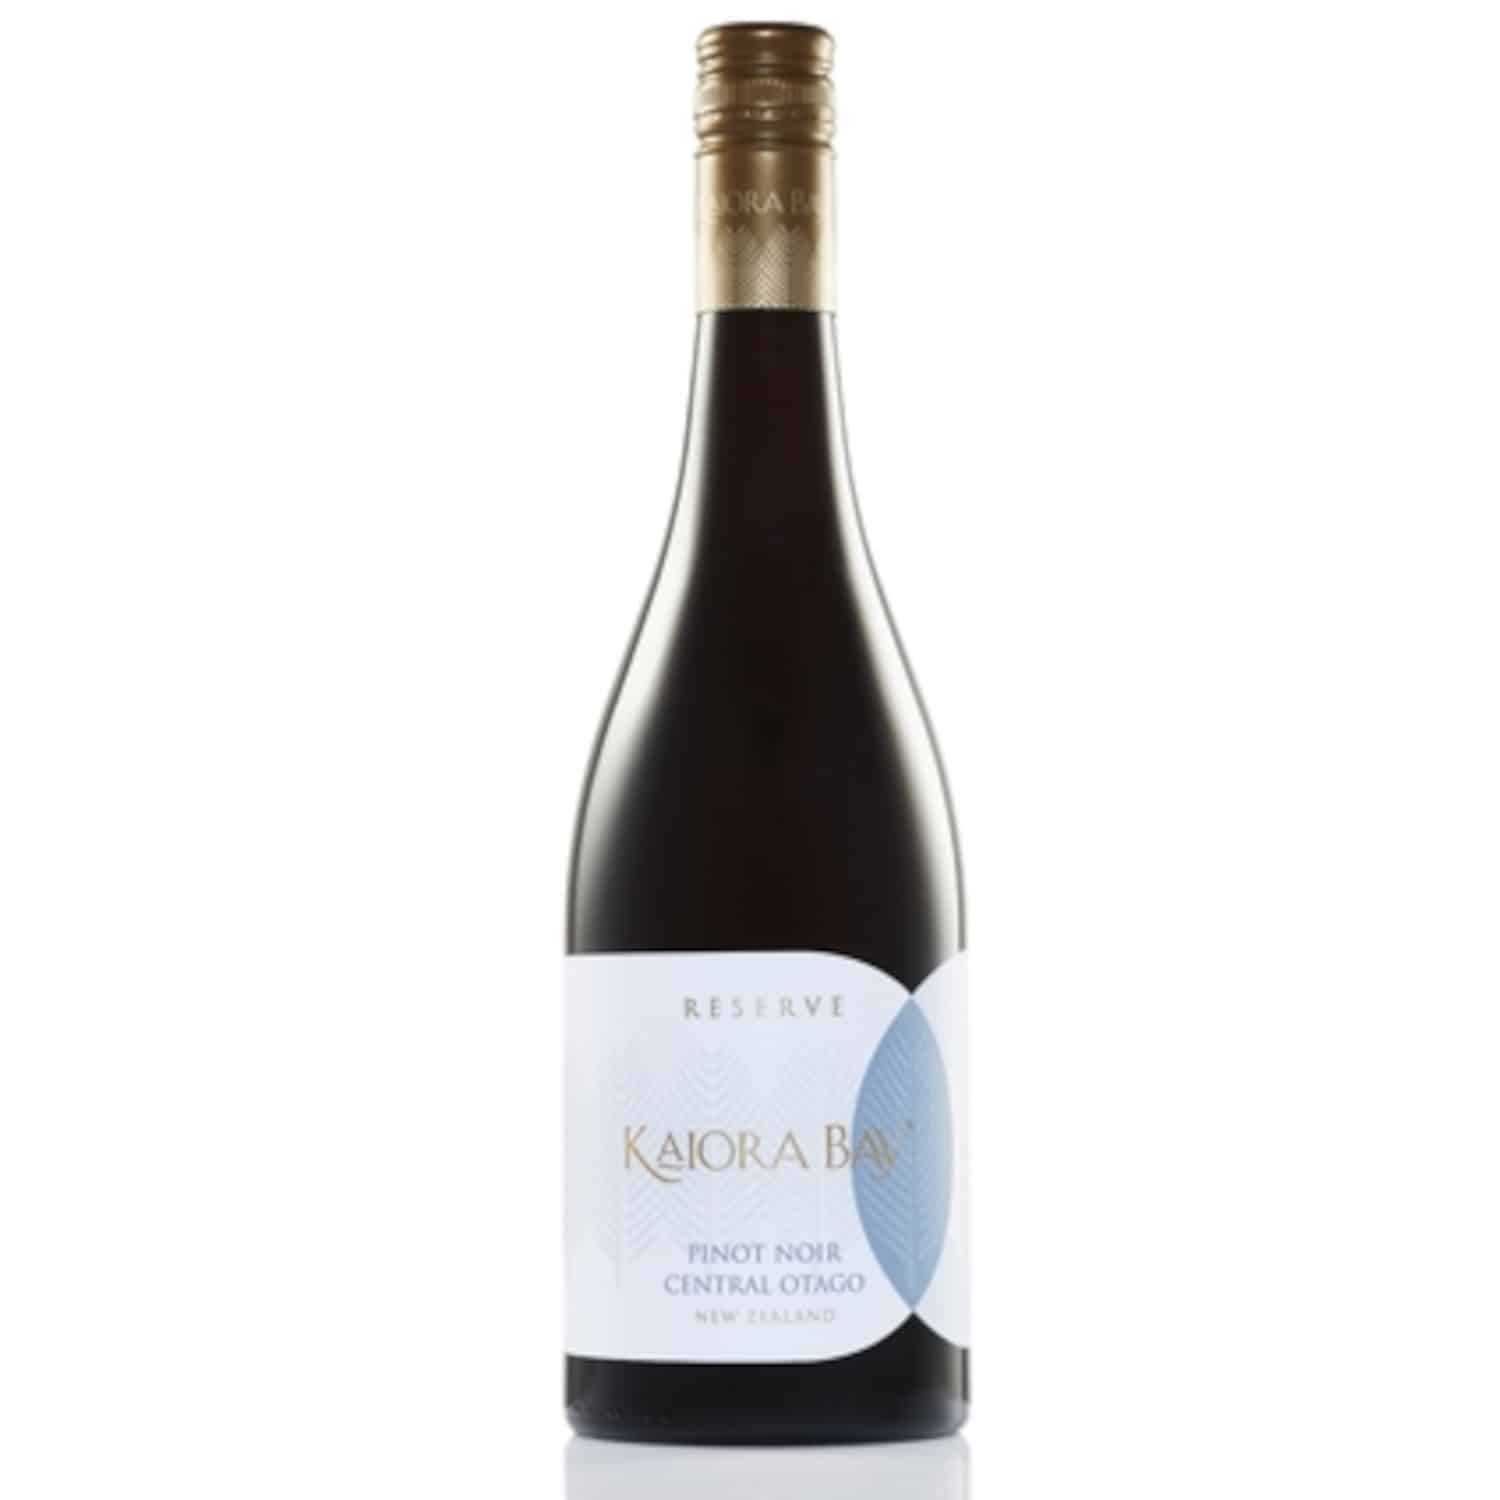 Kaiora Bay Central Otago Pinot Noir 2021